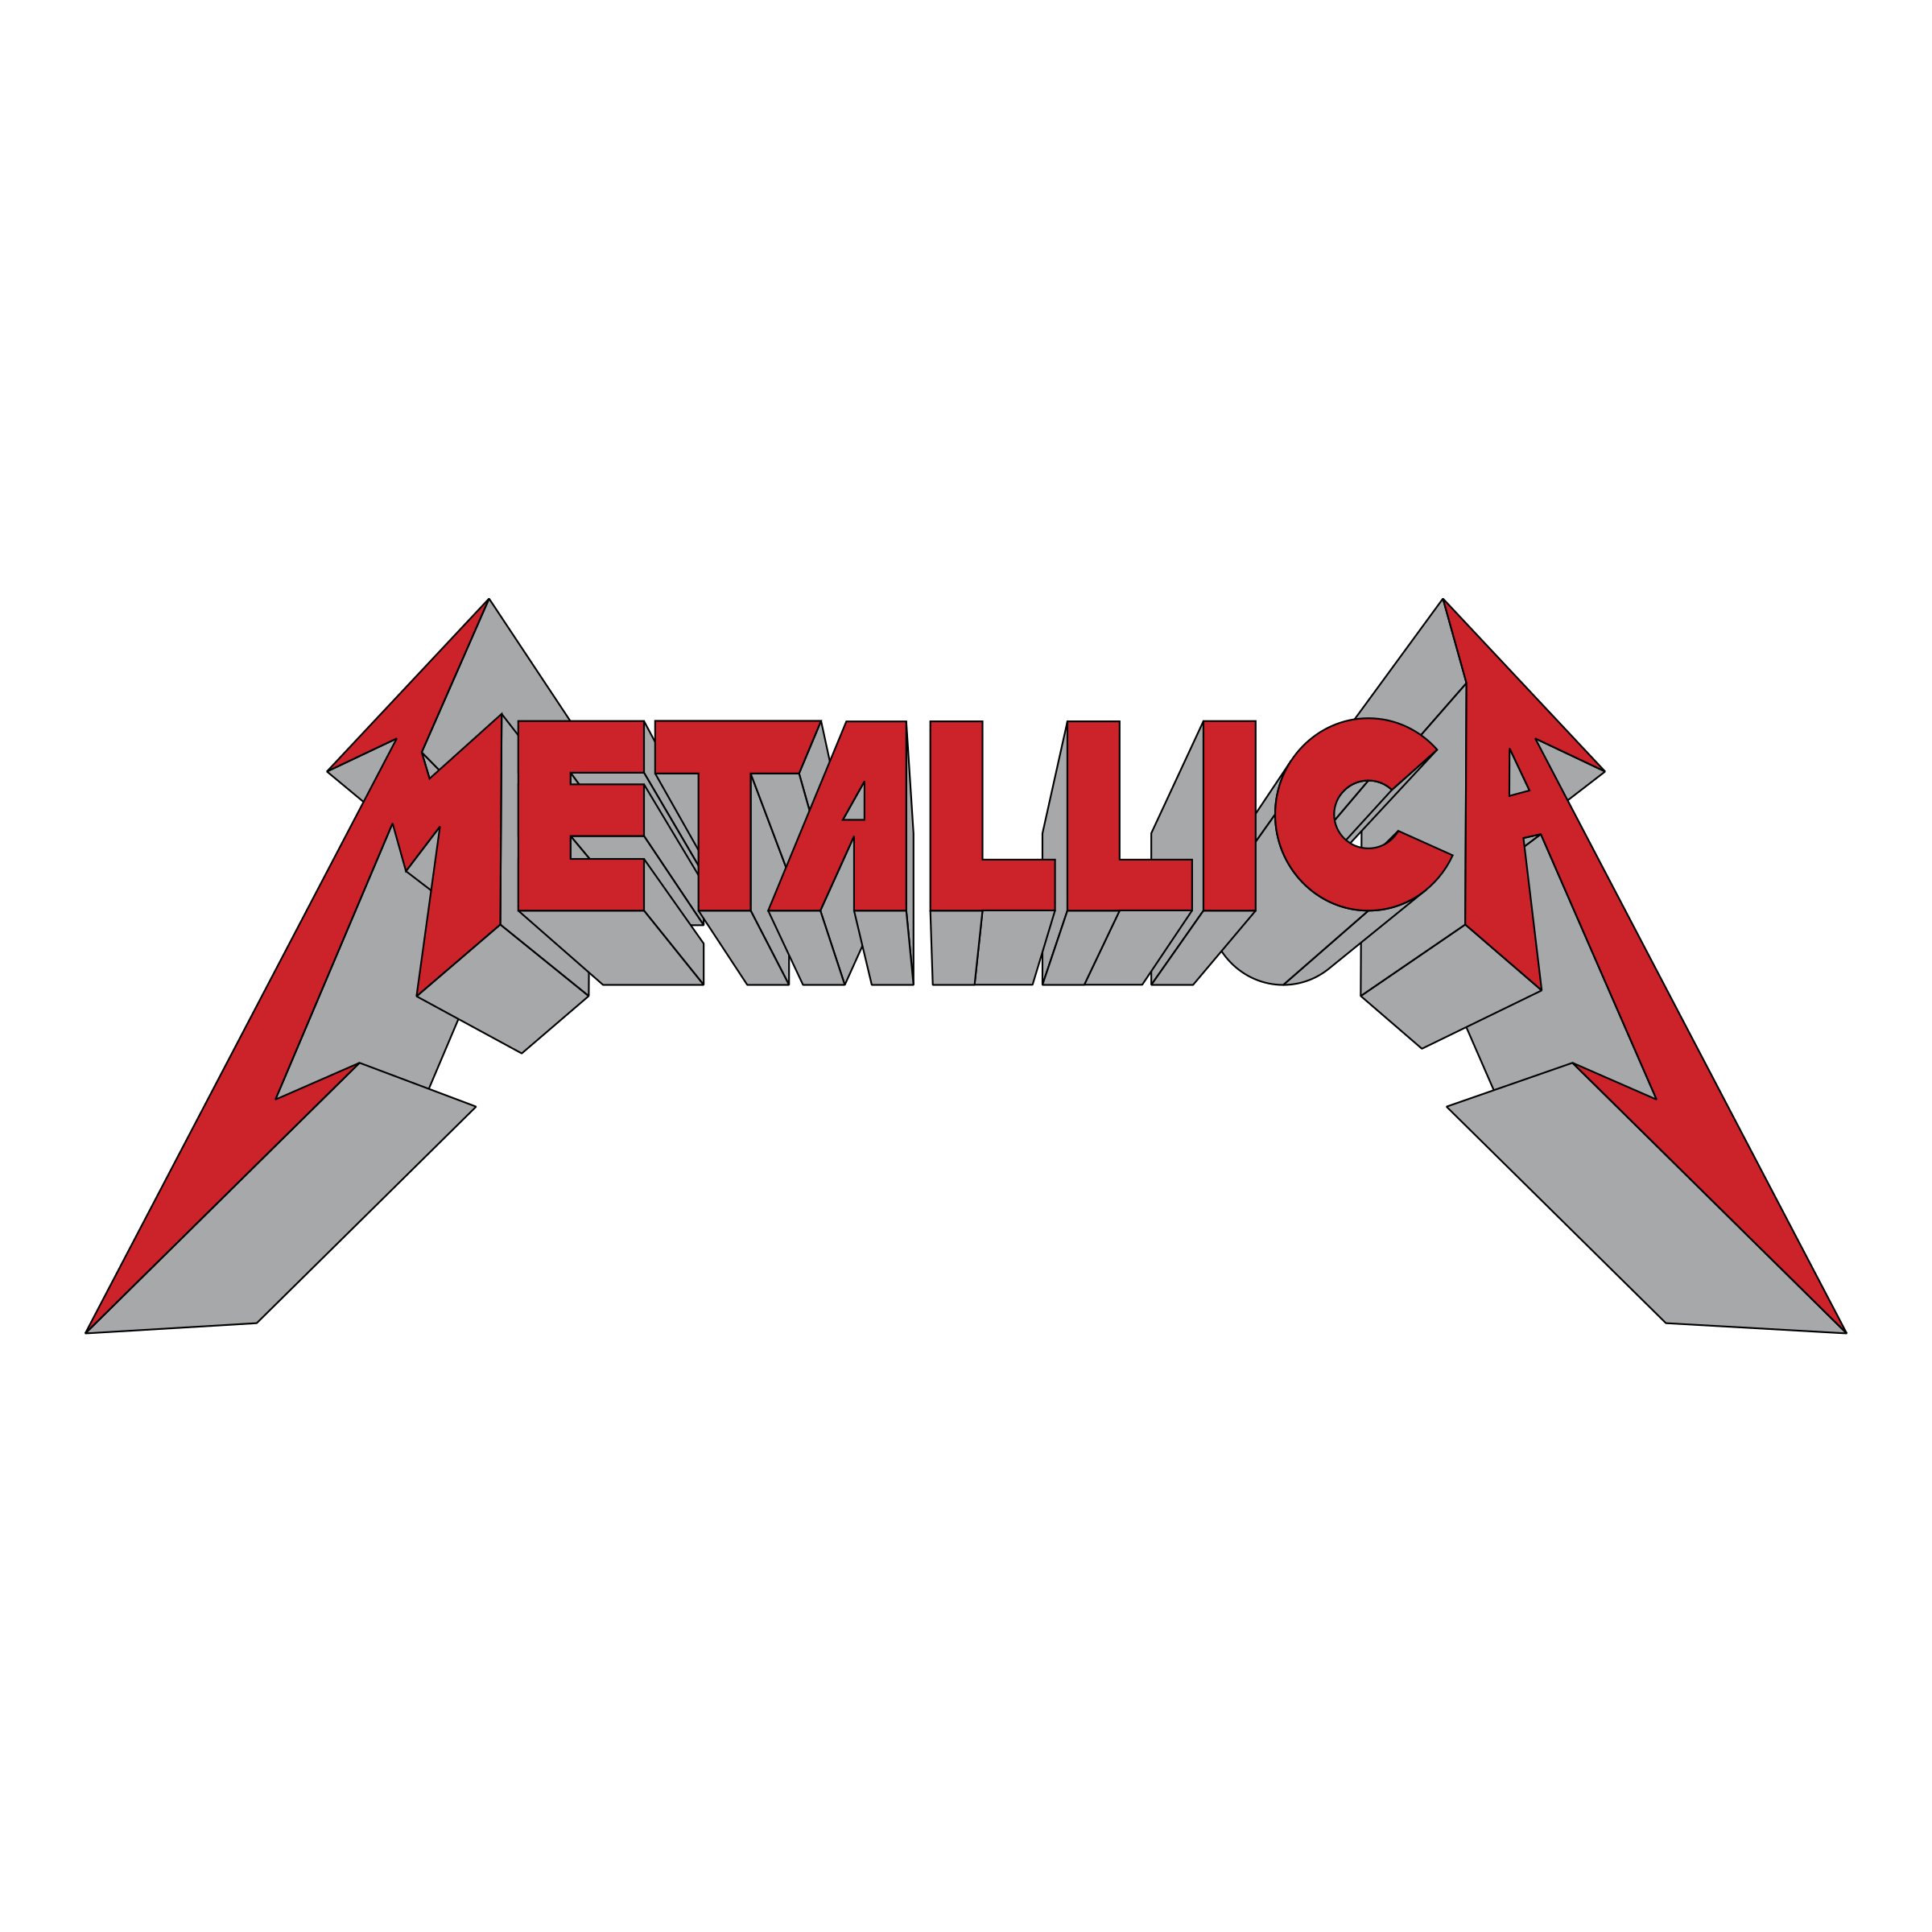 Metallica Logo - Metallica Logo PNG Transparent & SVG Vector